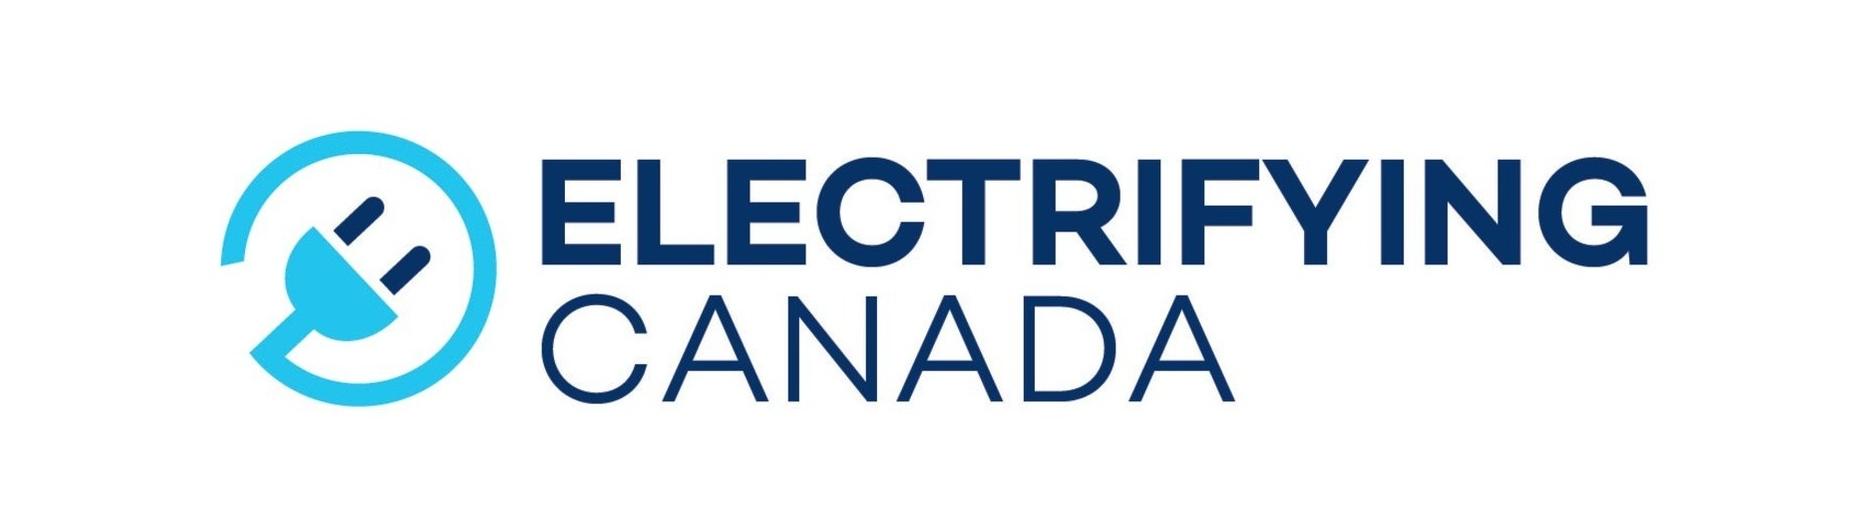 Electrifying Canada